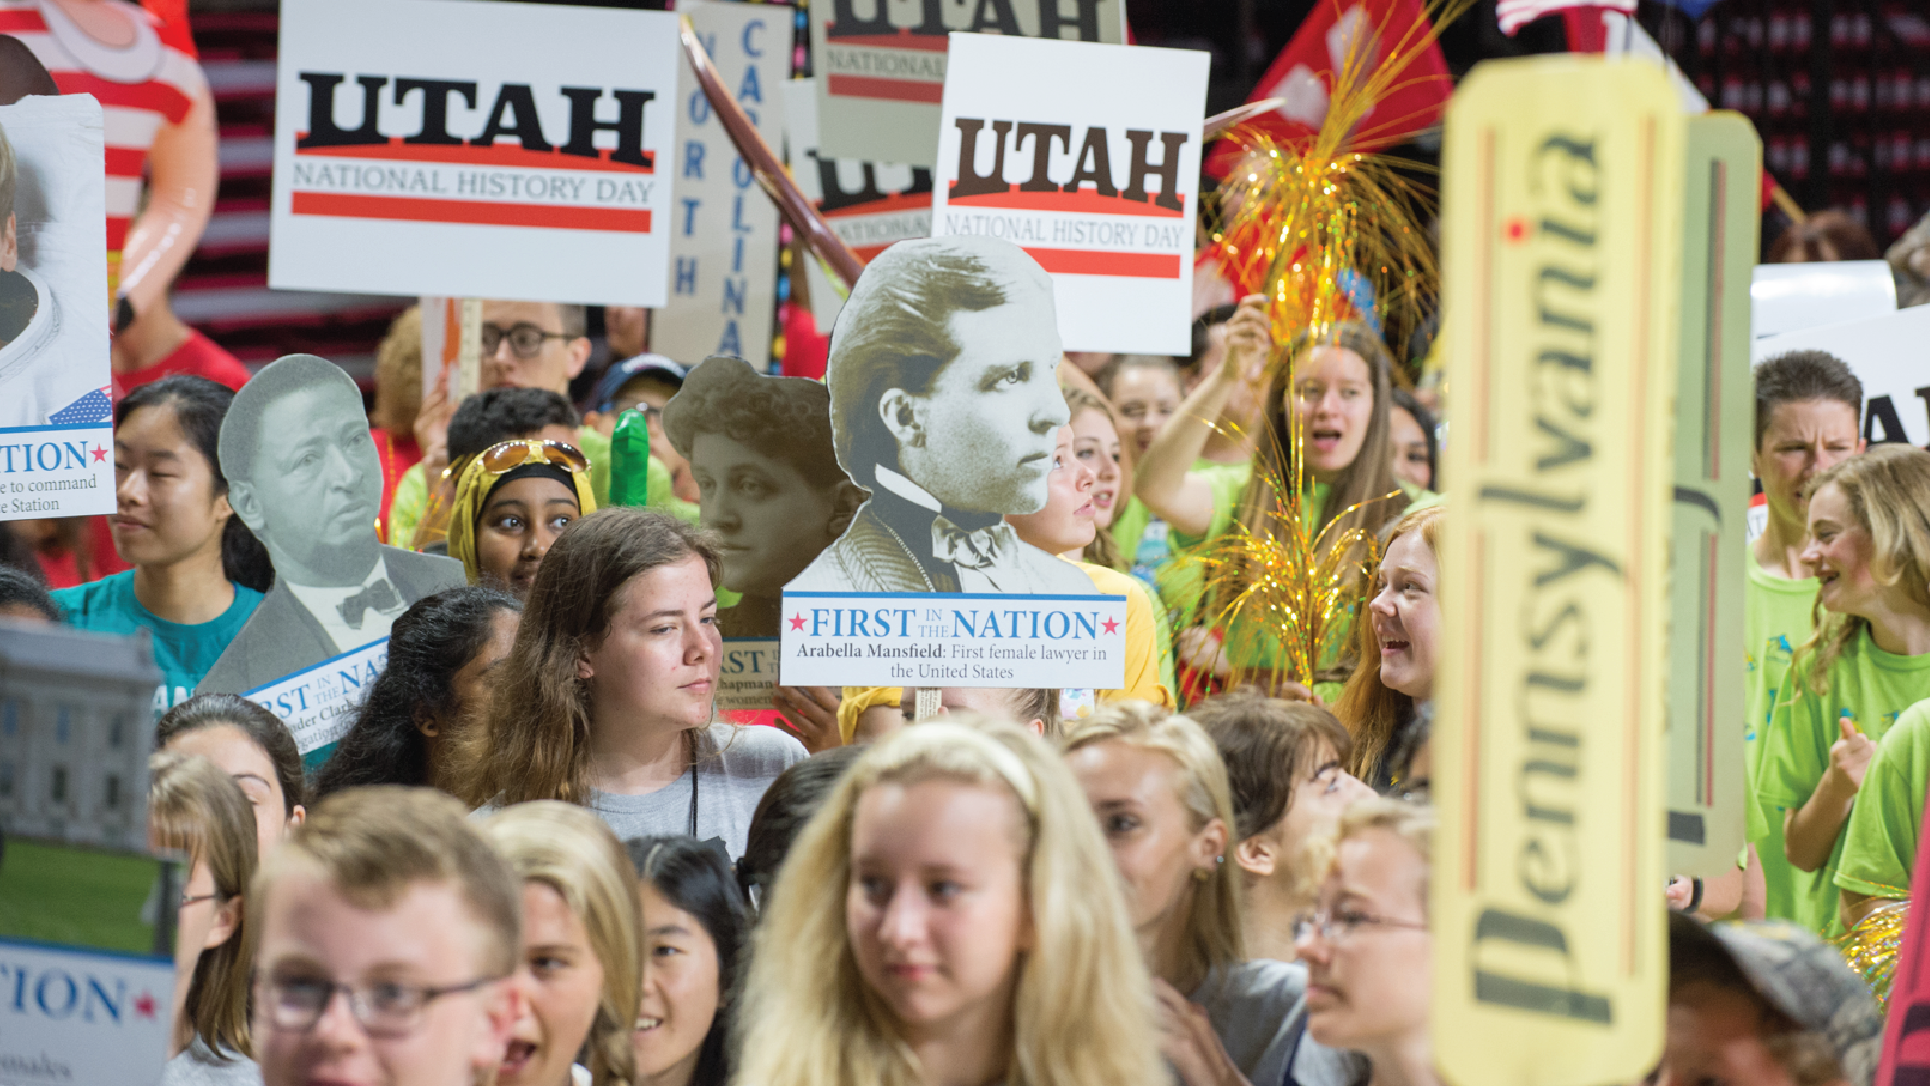 Many students gathered in celebration of National History Day, one of the Utah Historical Society's many programs